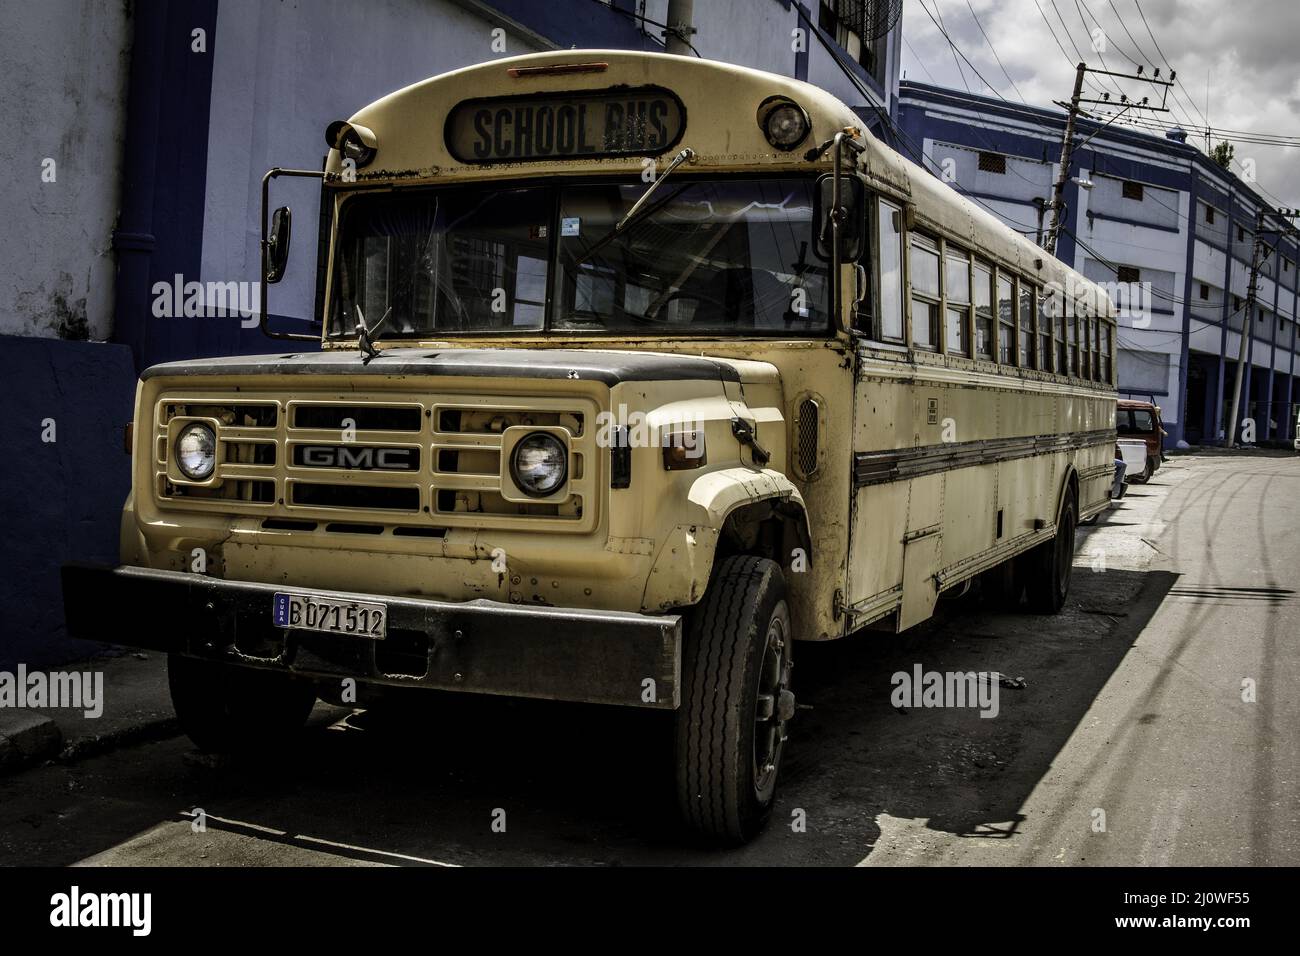 Big school bus yellow color, GMC truck model 6000 Stock Photo